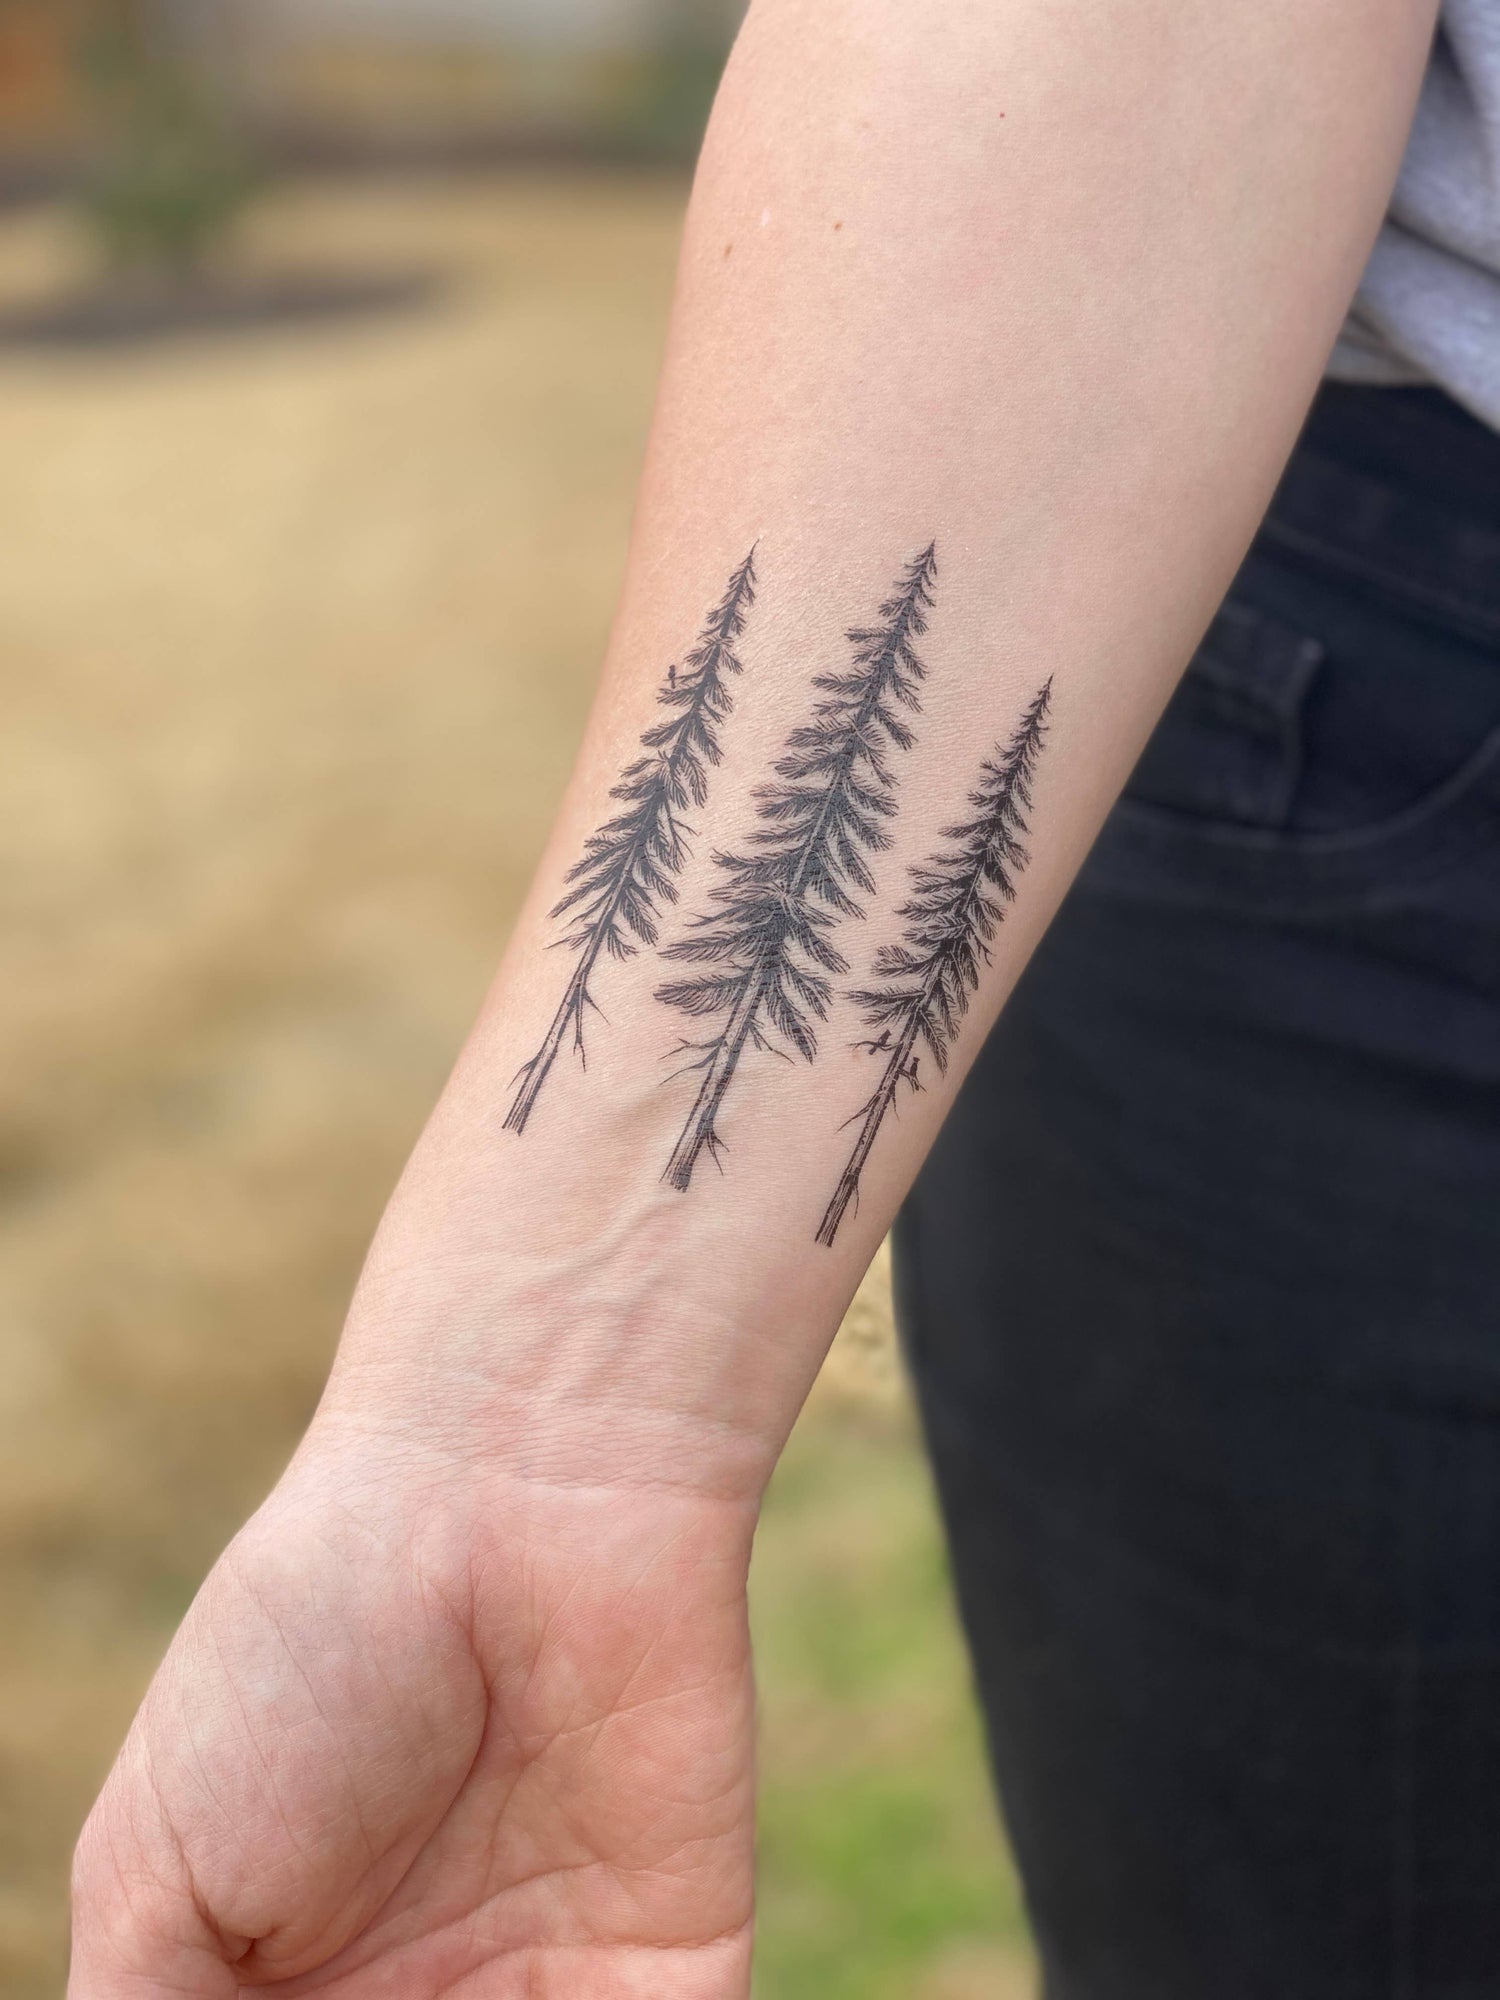 Pine Trees temporary tattoo by NatureTats